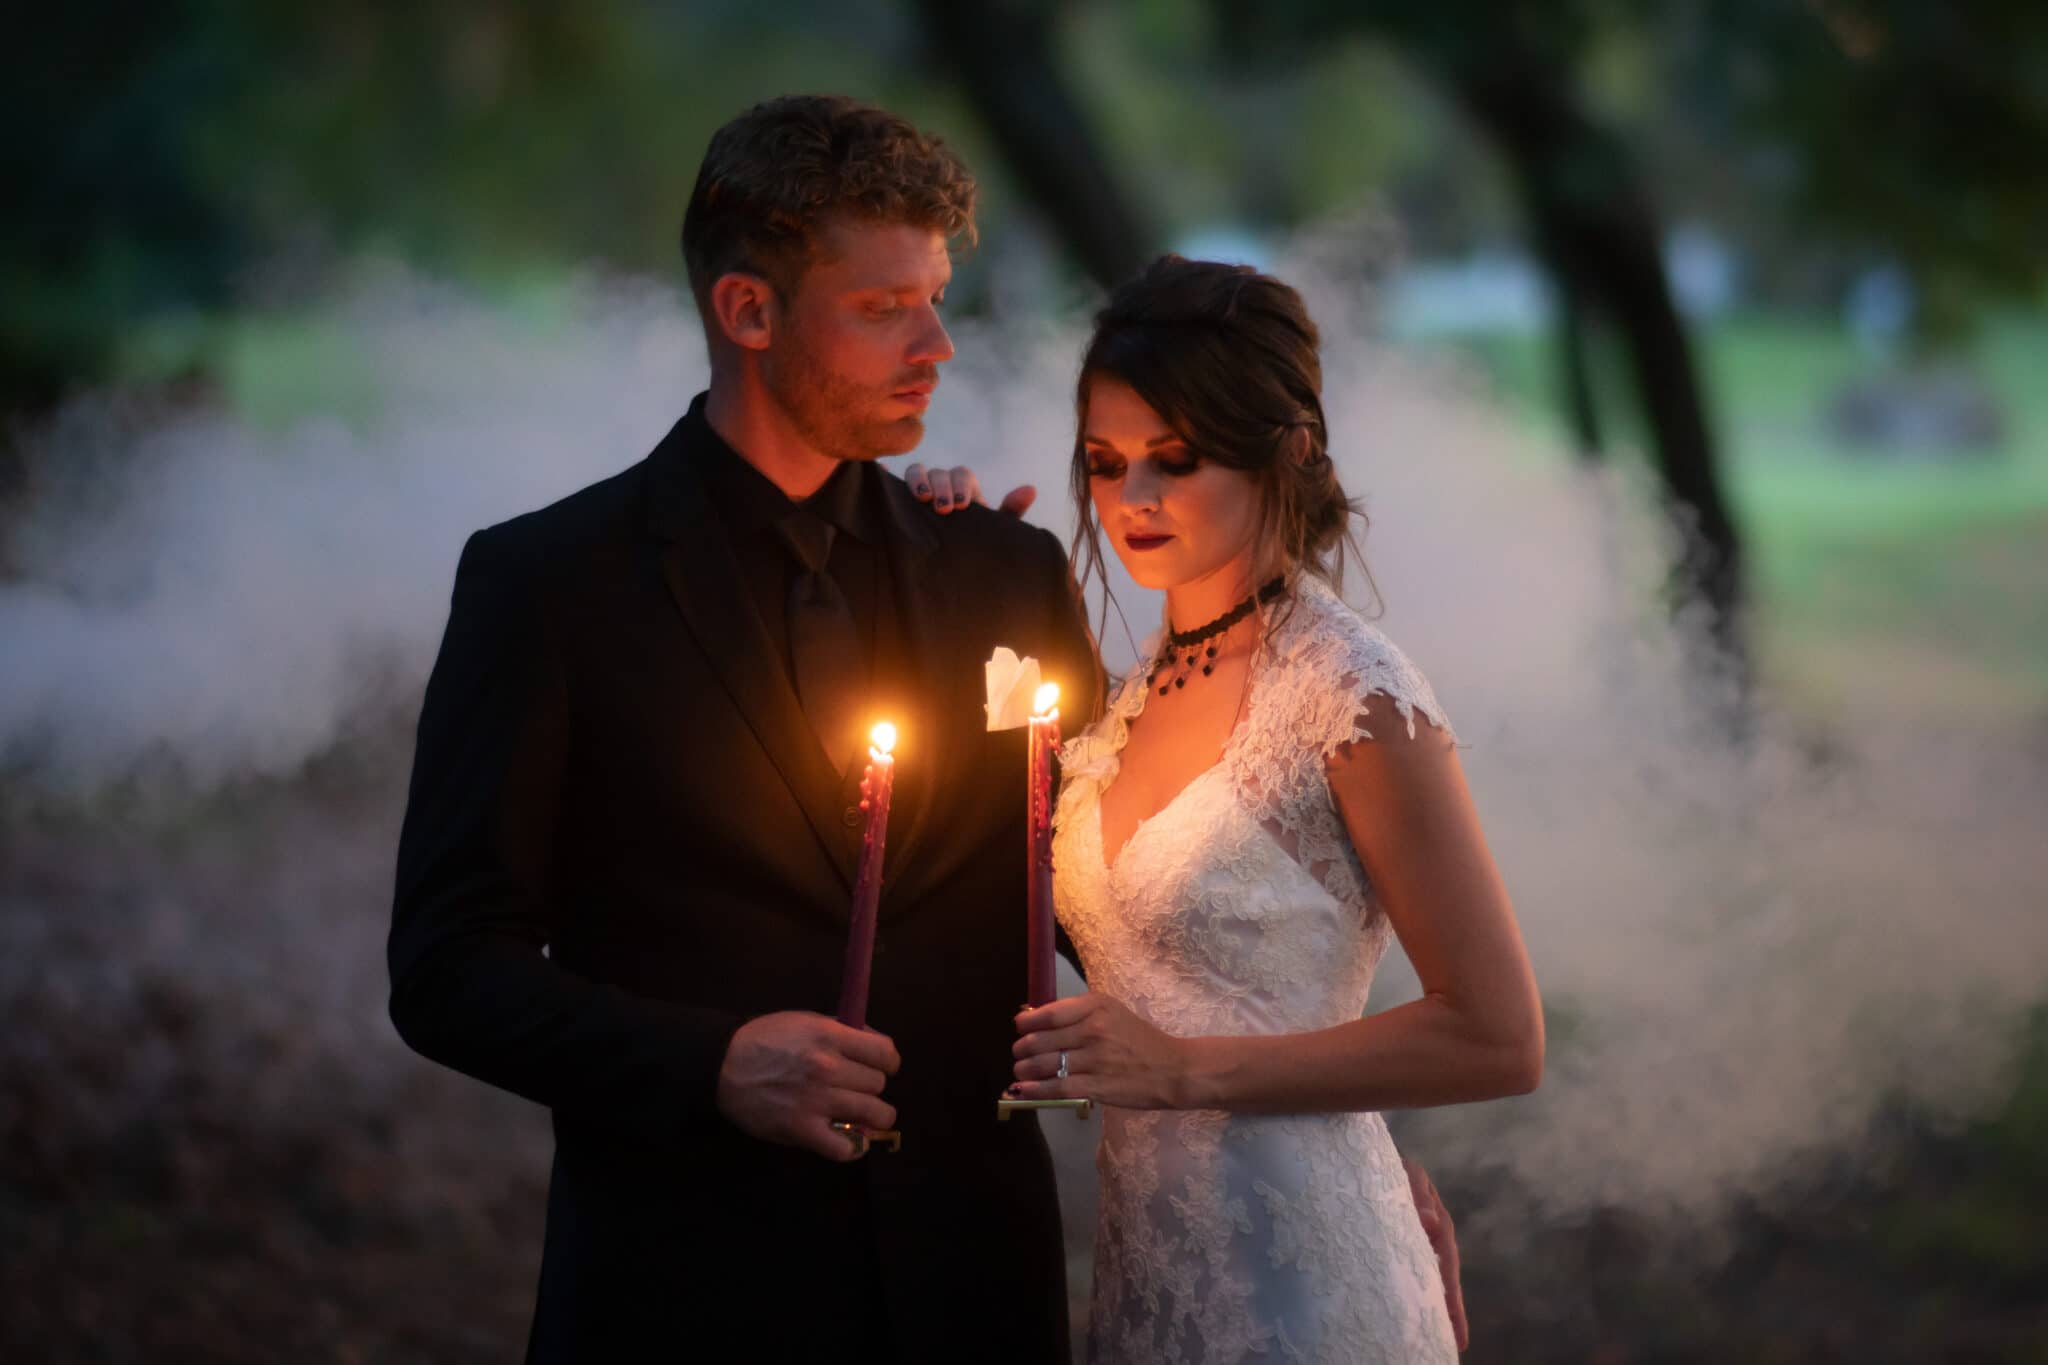 Gothic Victorian Wedding, bride & groom with candles in dark